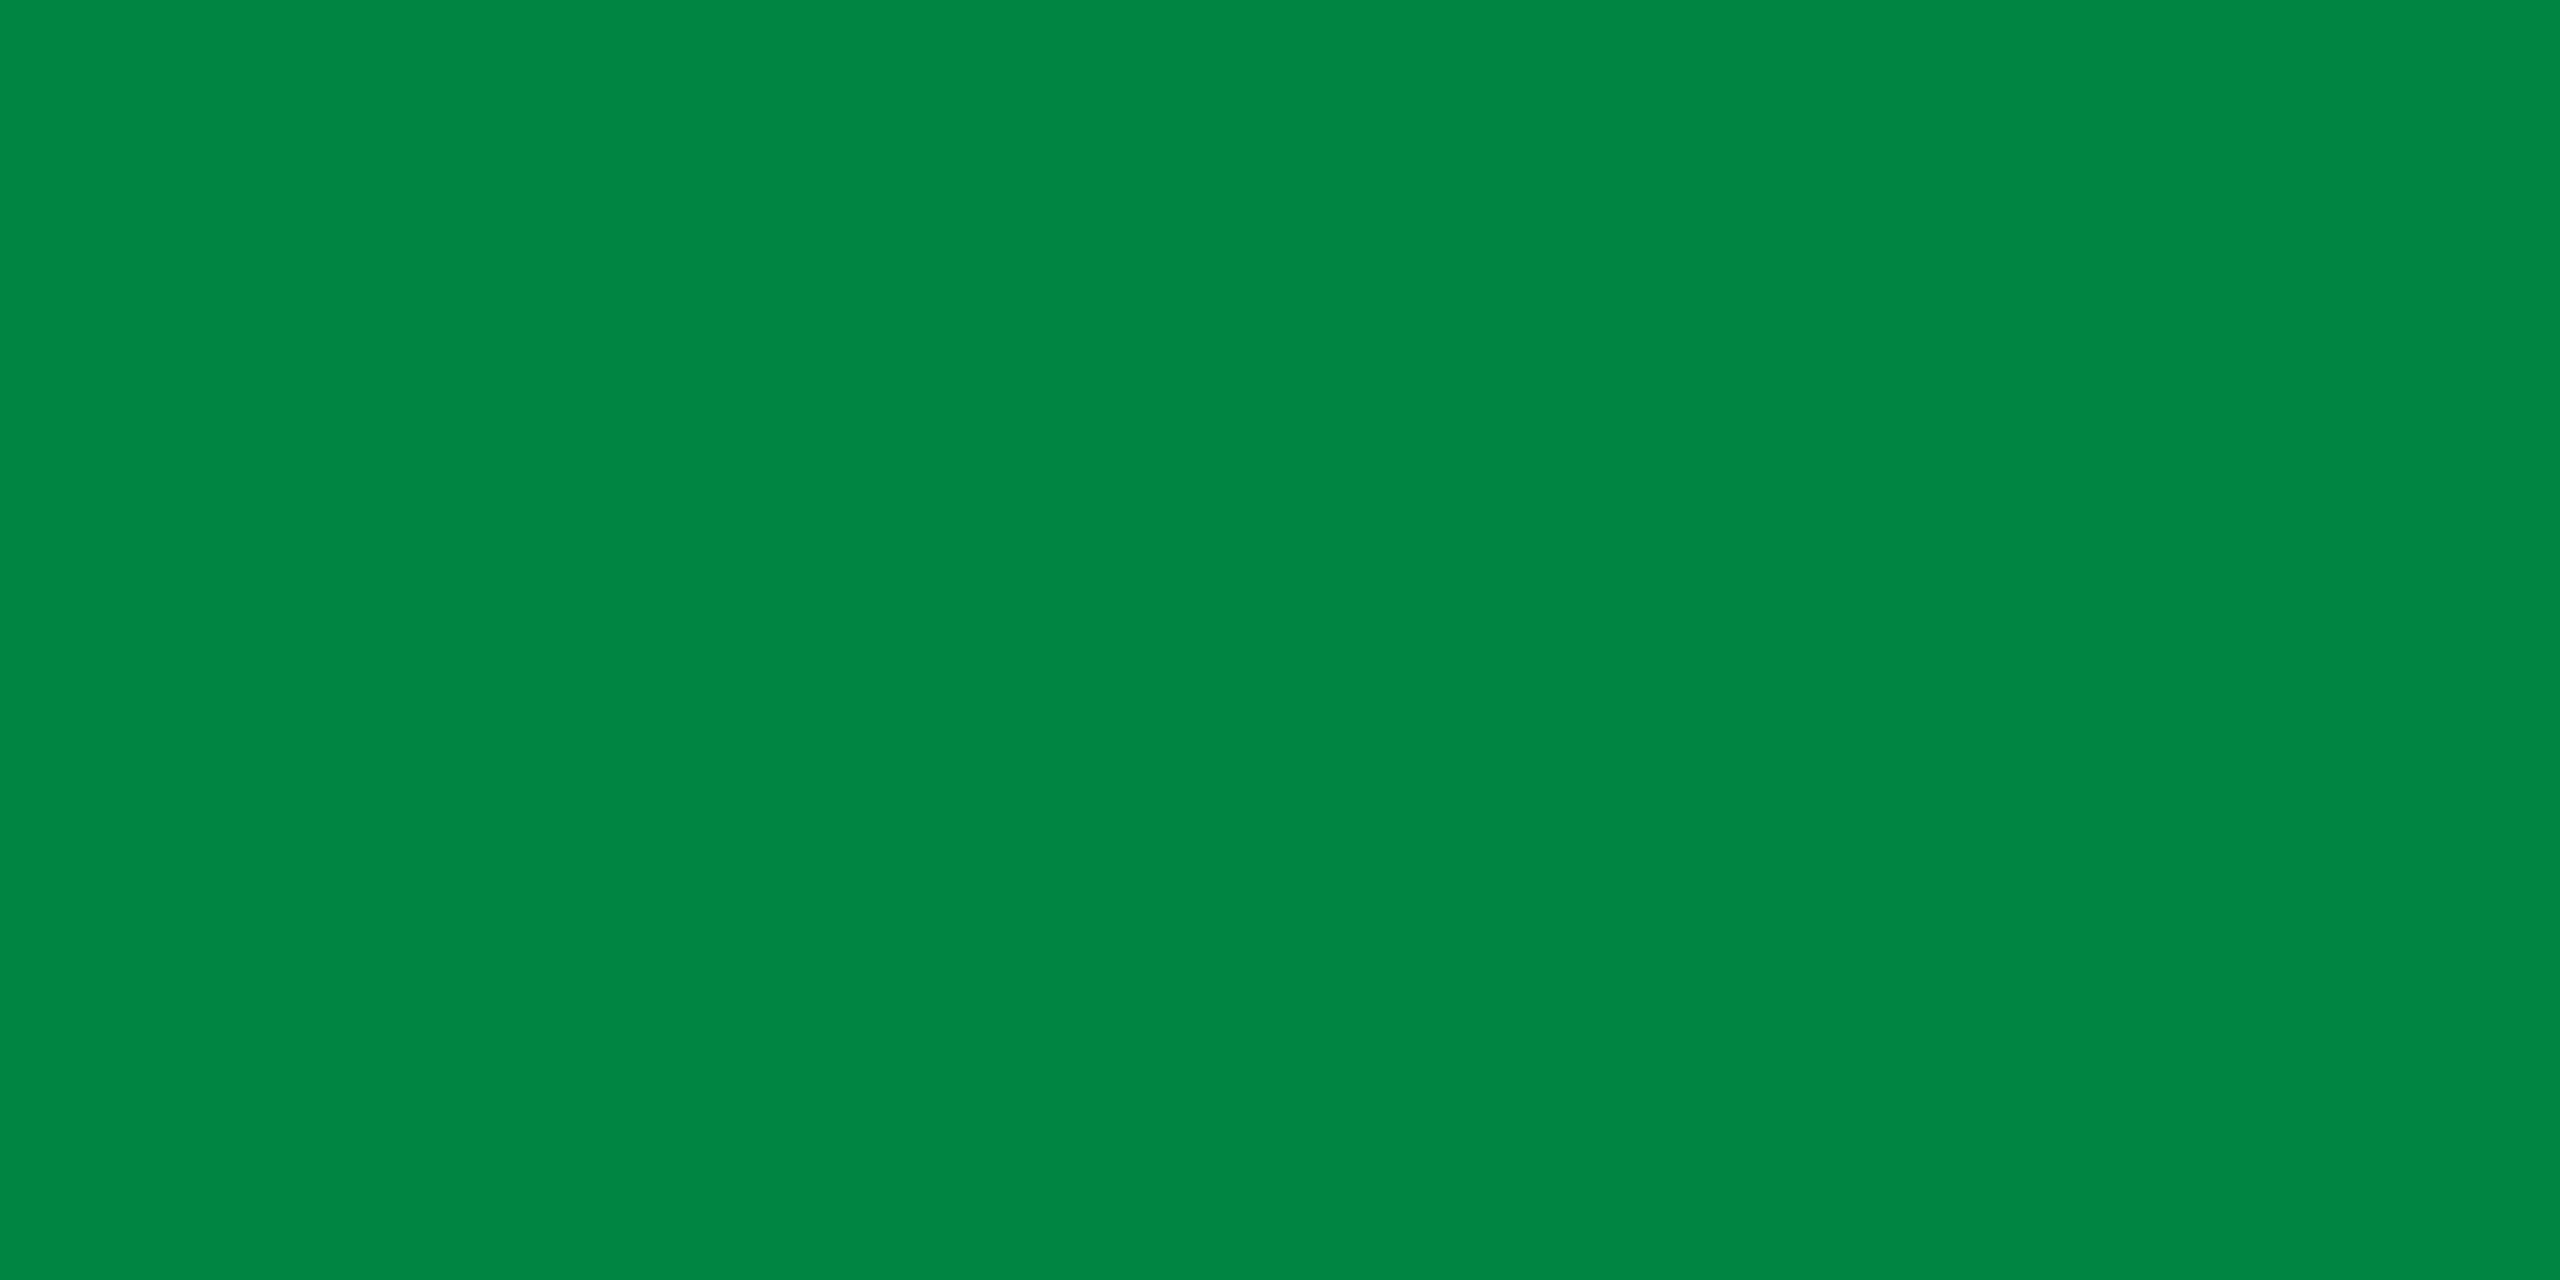 File:Green Libya flag.png